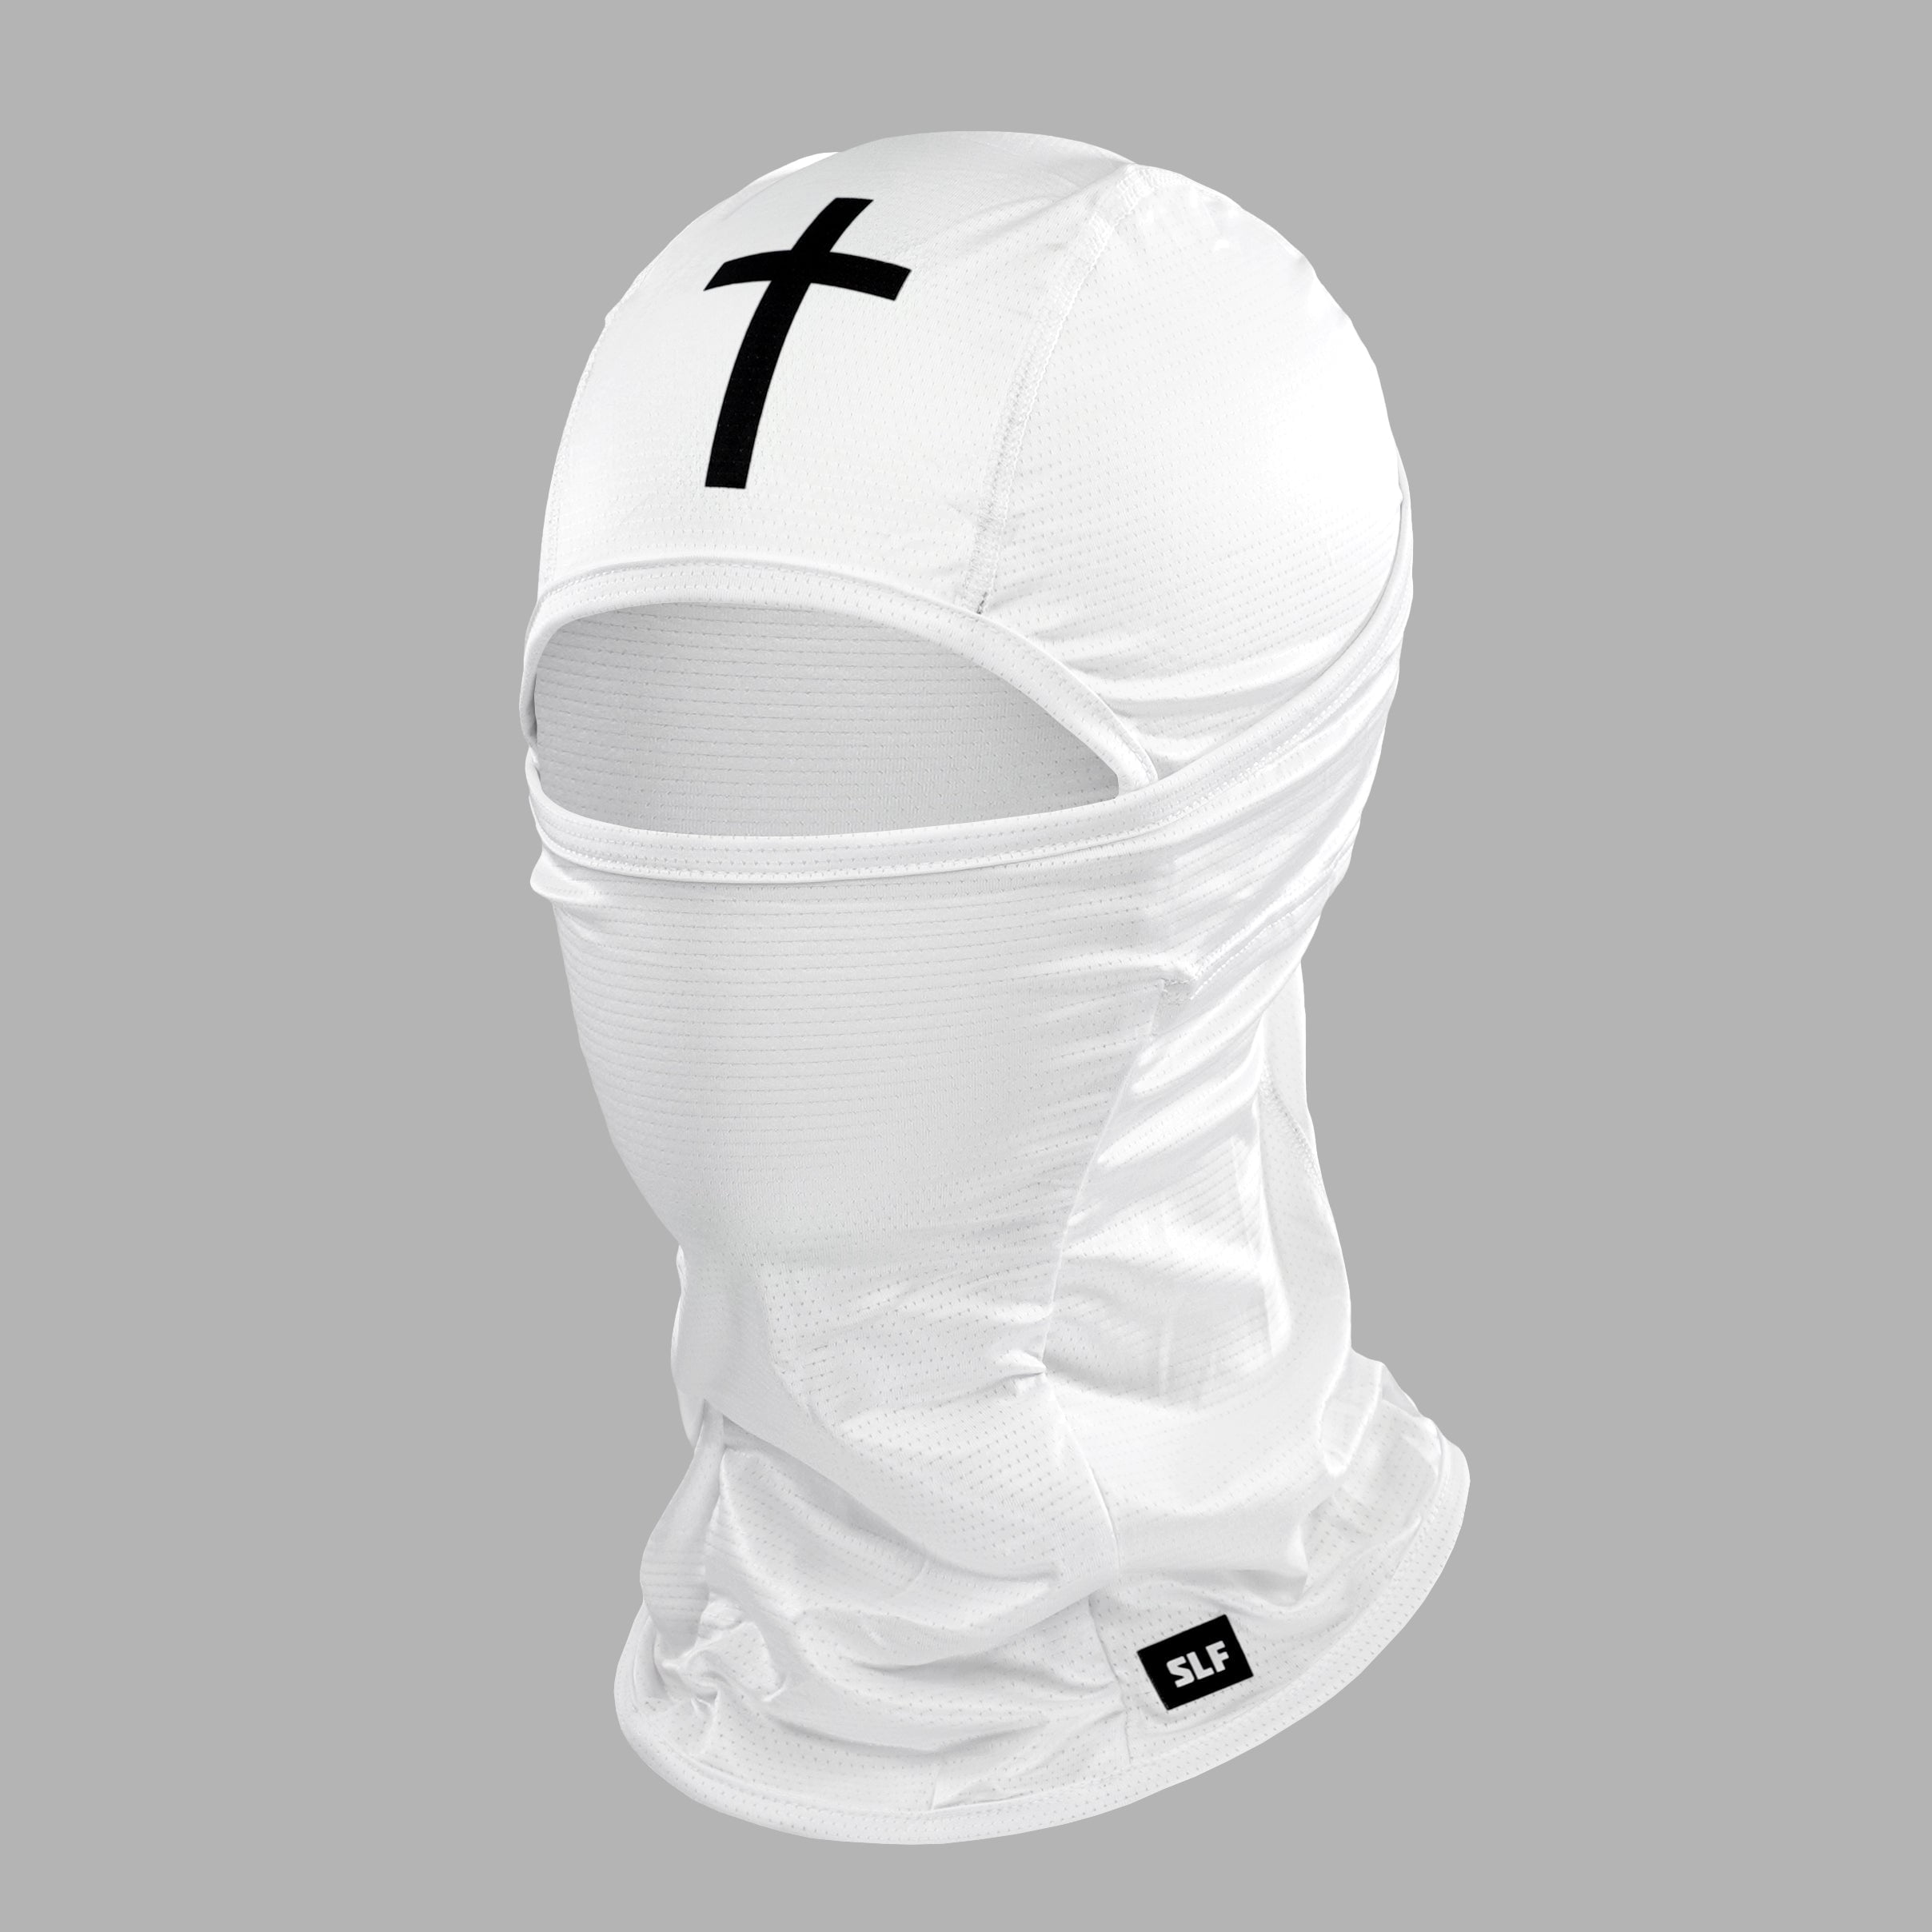 Faith Cross White Loose-fitting Shiesty Mask - Walmart.com